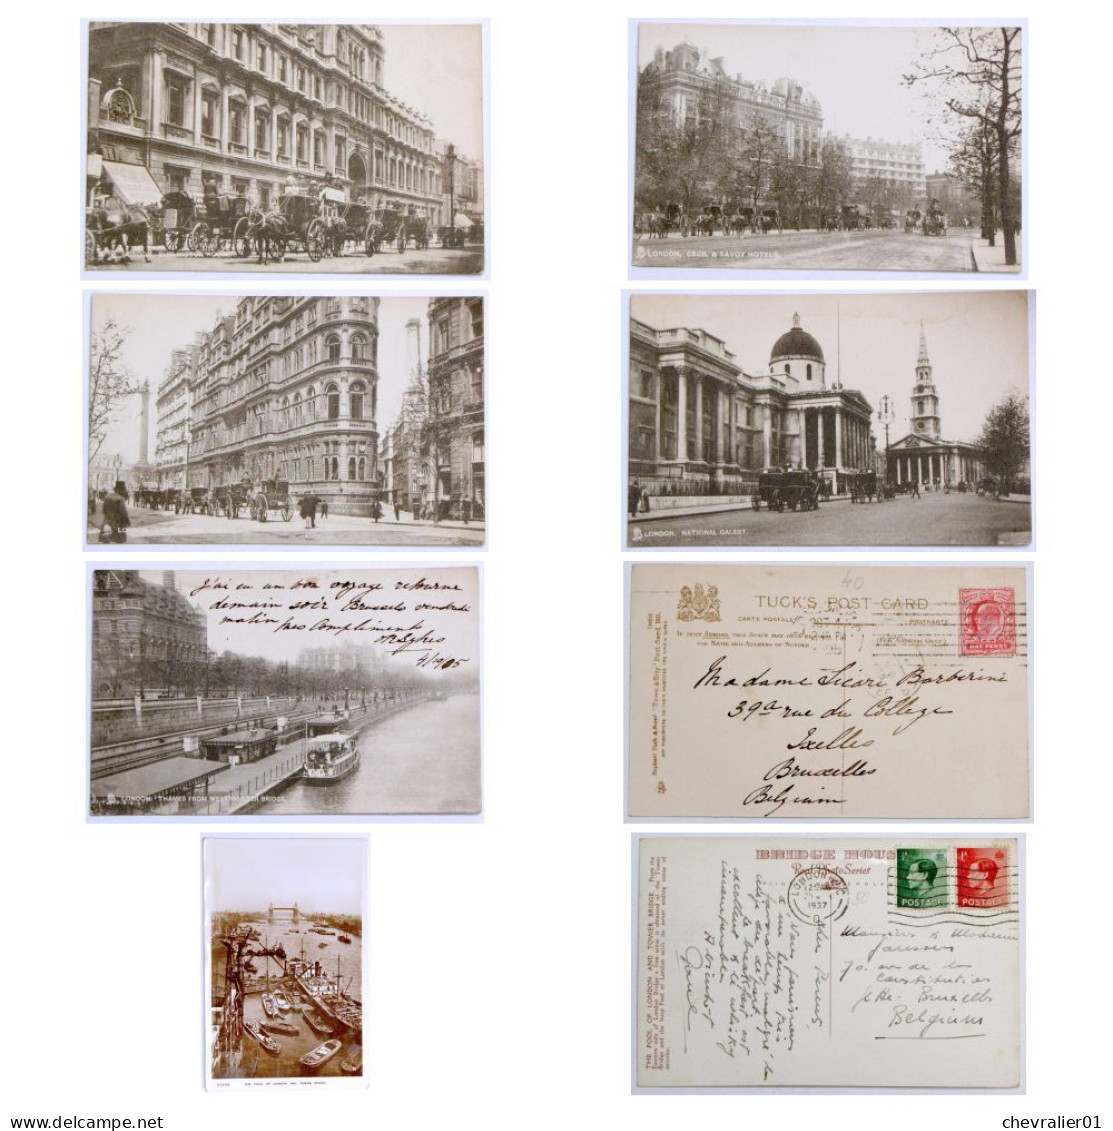 CPA-UK_London_lot de 43 cartes postales